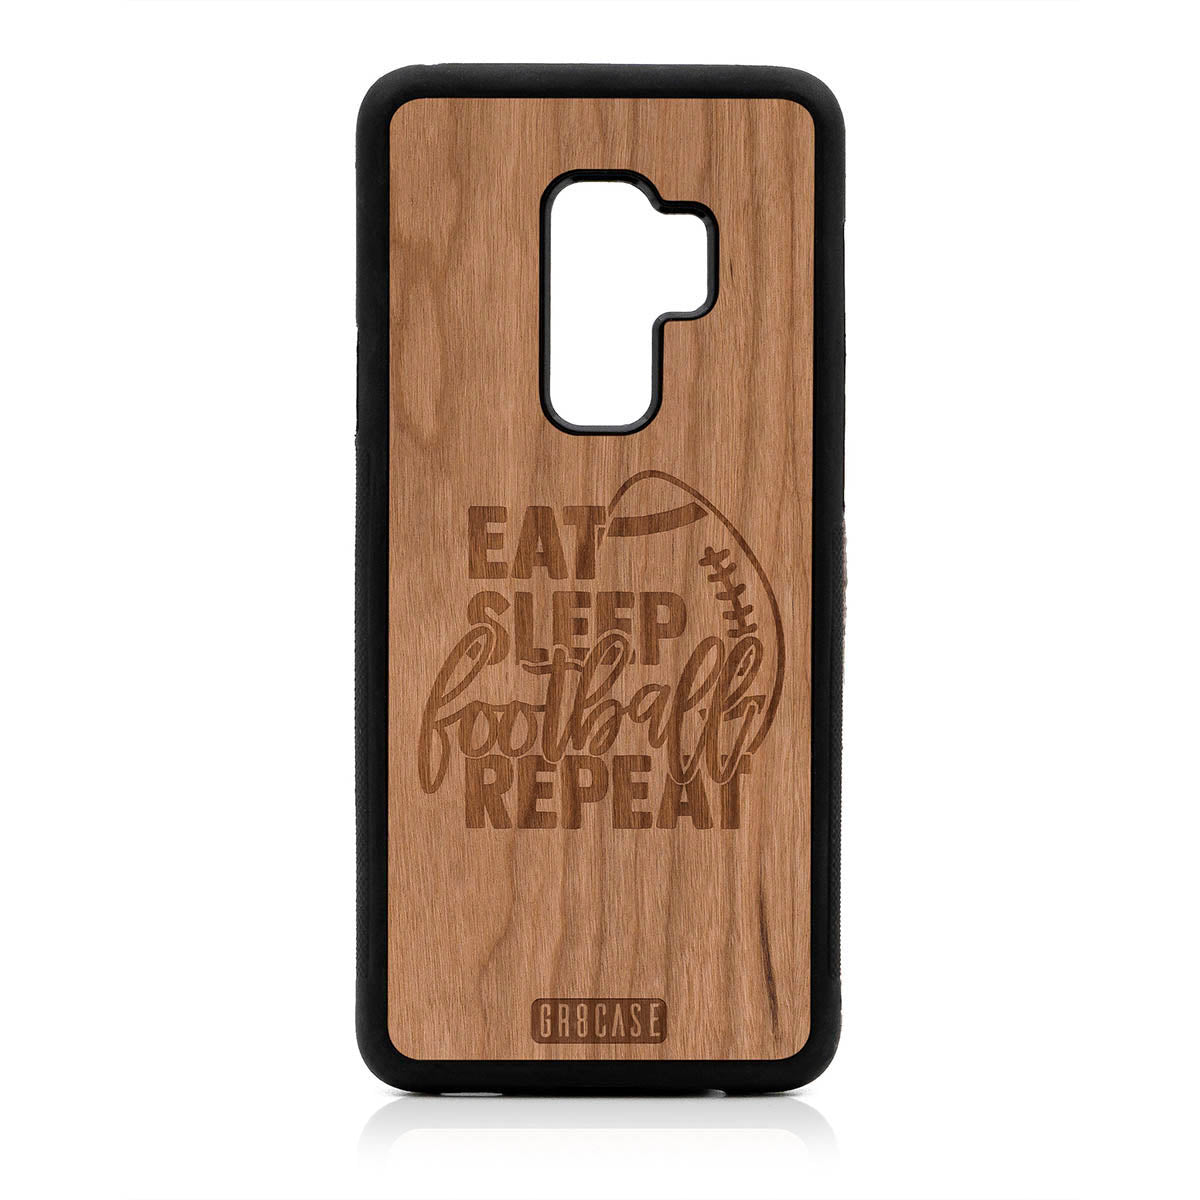 Eat Sleep Football Repeat Design Wood Case For Samsung Galaxy S9 Plus